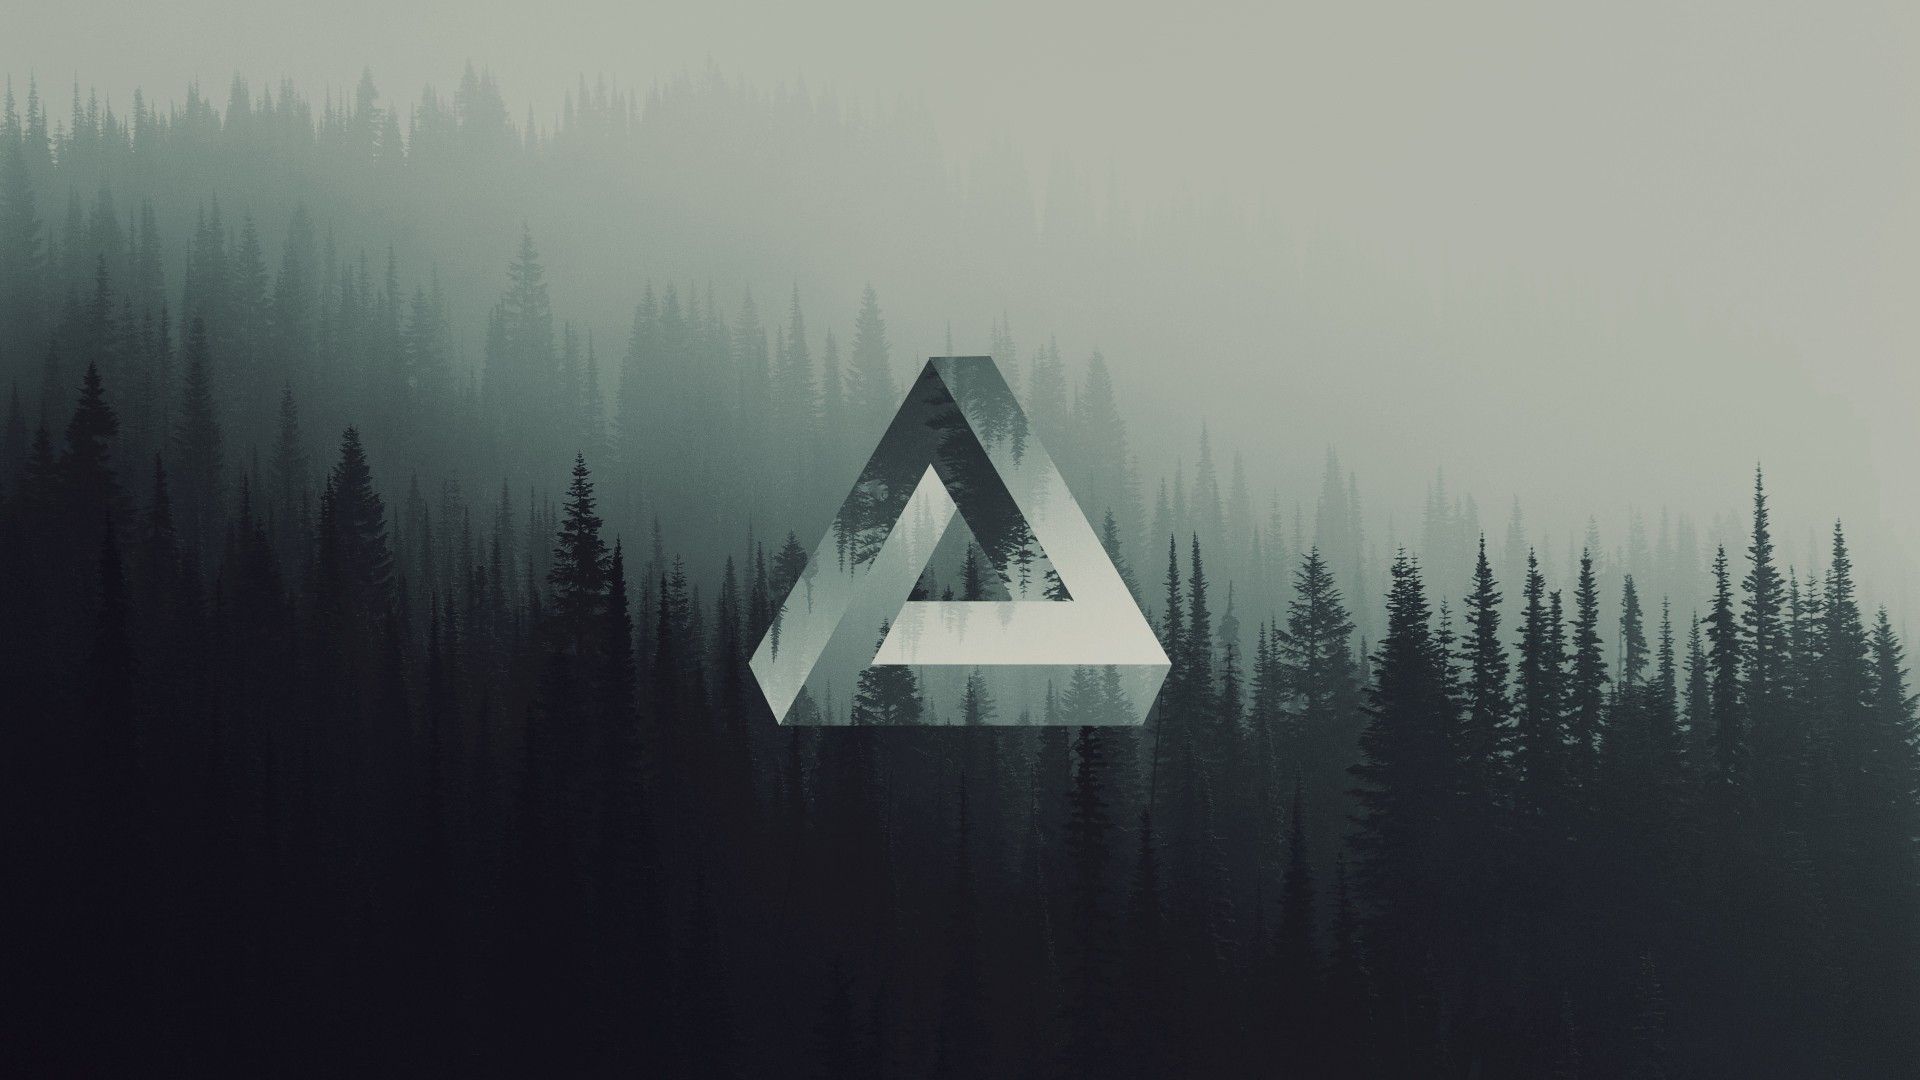 triangle desktop wallpaper